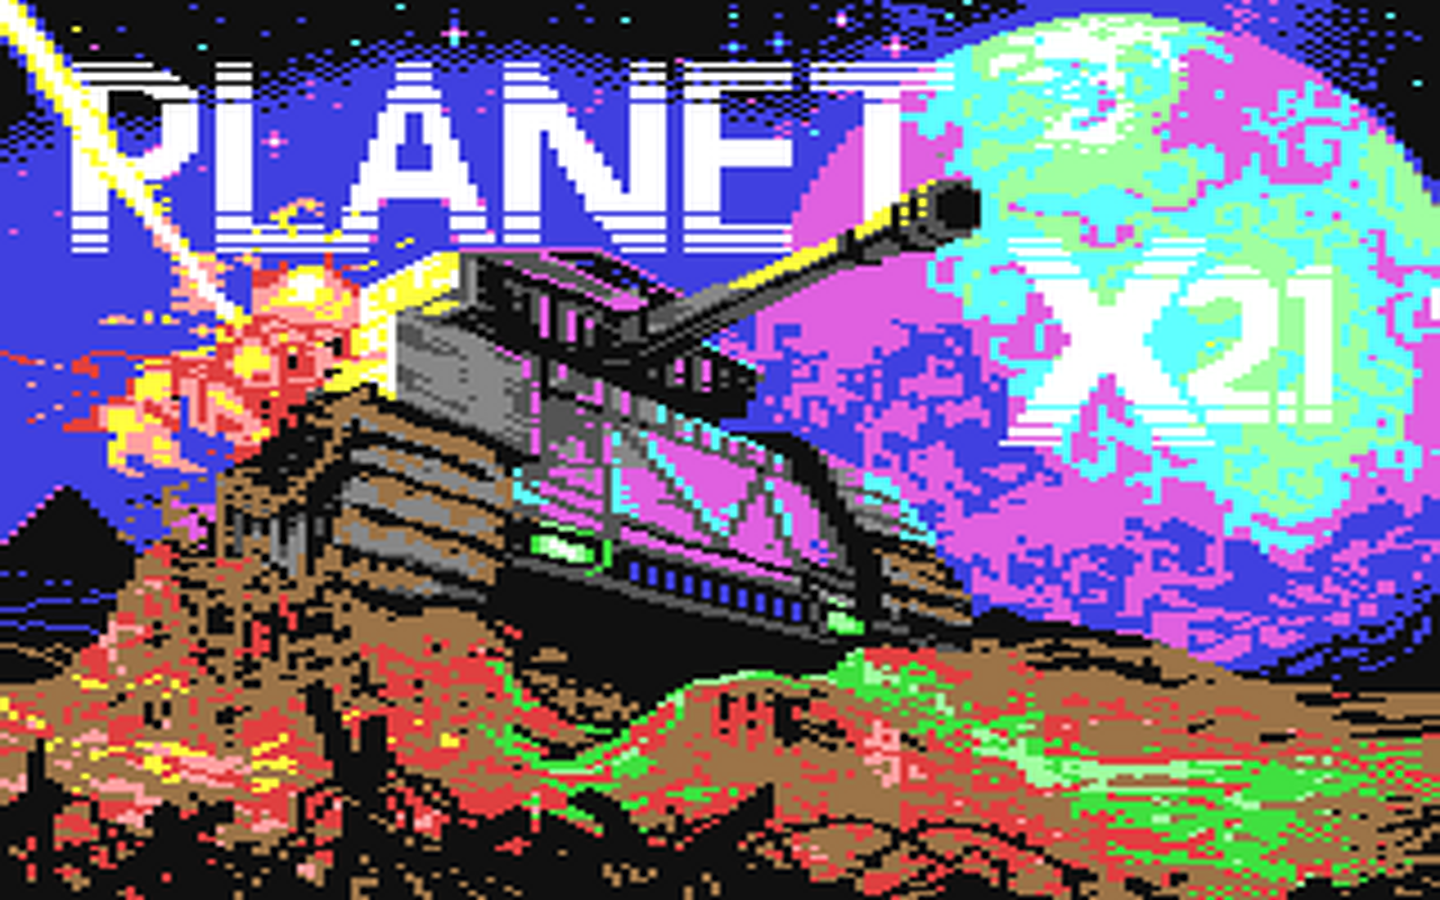 C64 GameBase Planet_X2.1 Protovision 2020